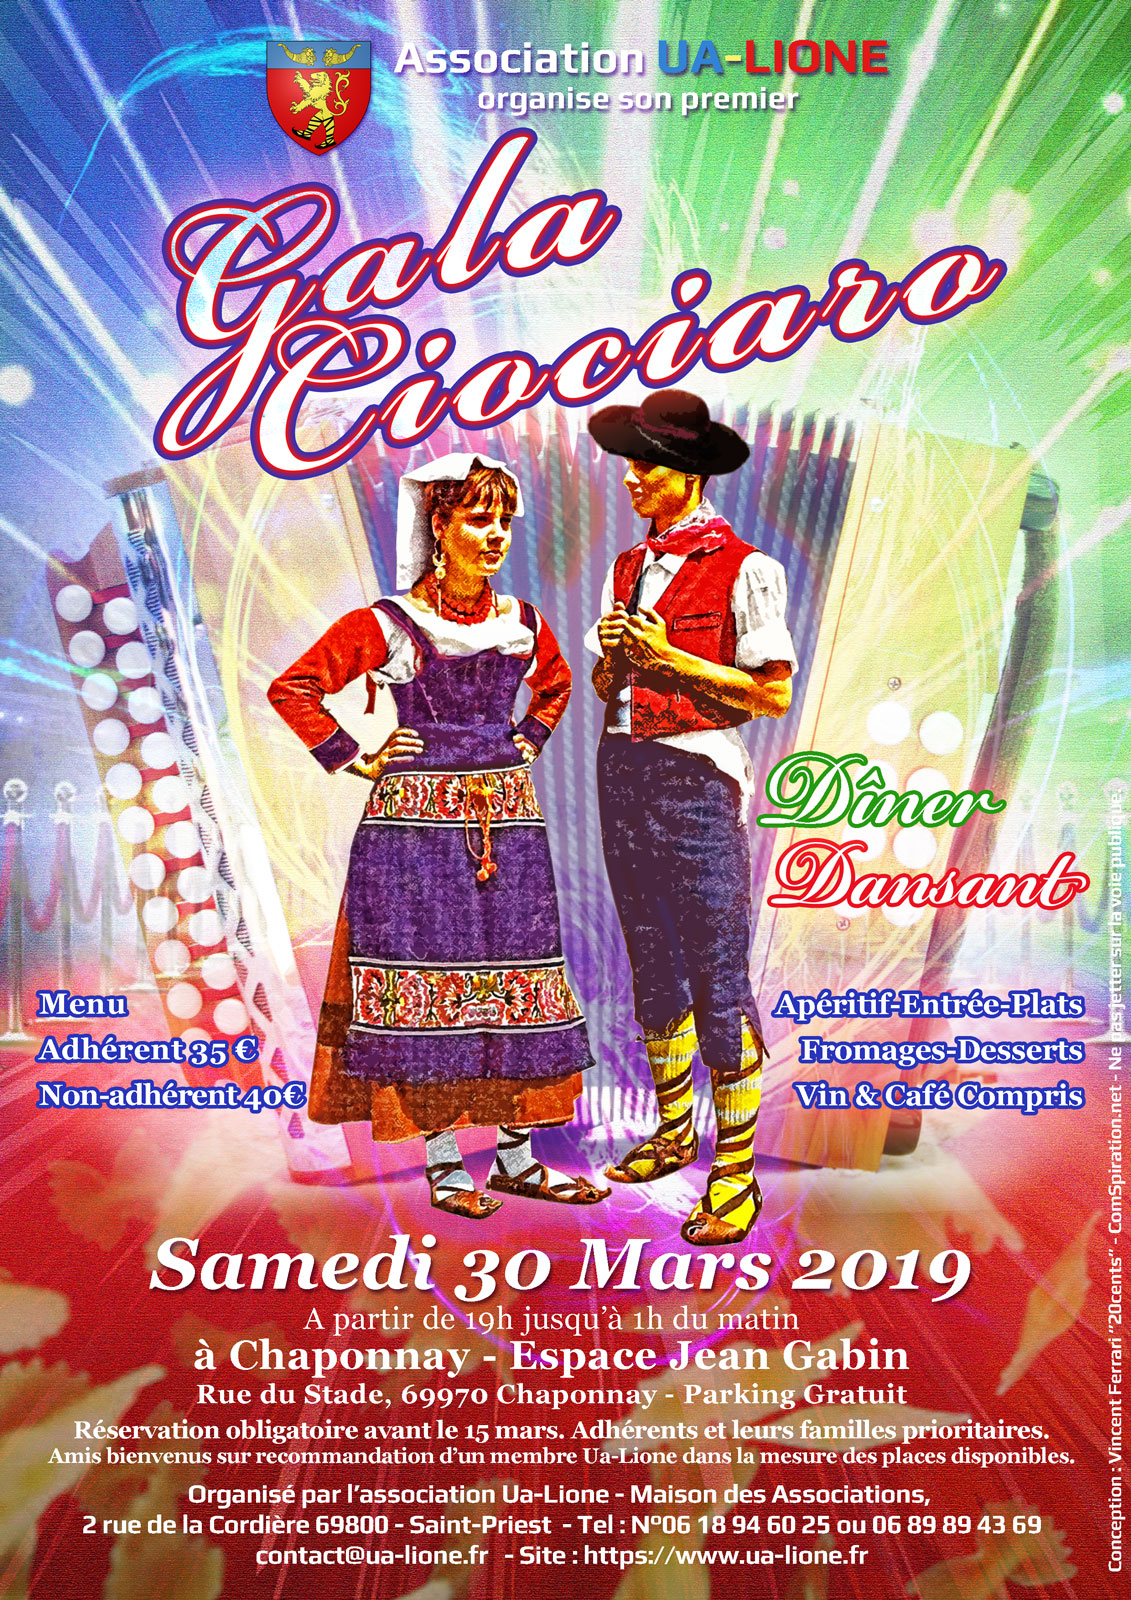 affiche gala ciociaro ua-lione 2019